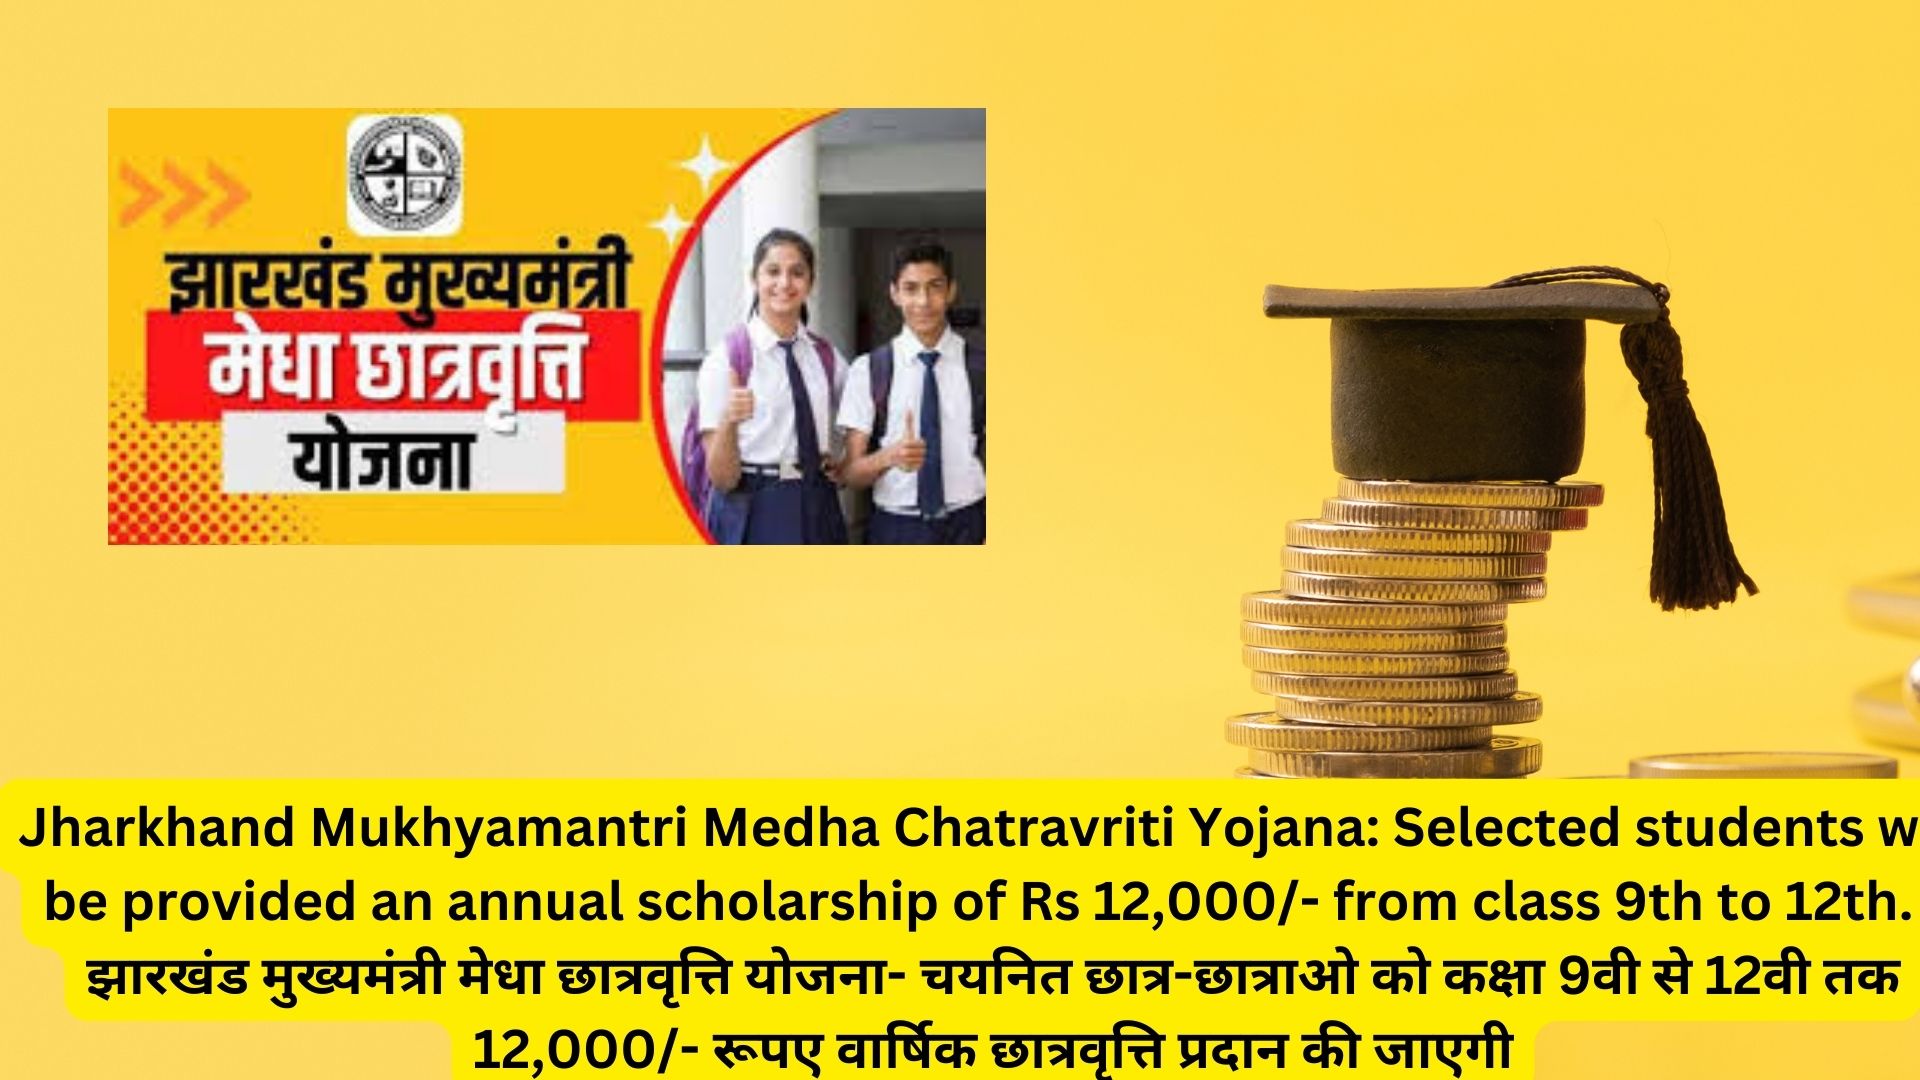 Jharkhand Mukhyamantri Medha Chatravriti Yojana: Selected students will be provided an annual scholarship of Rs 12,000/- from class 9th to 12th. I झारखंड मुख्यमंत्री मेधा छात्रवृत्ति योजना- चयनित छात्र-छात्राओ को कक्षा 9वी से 12वी तक 12,000/- रूपए वार्षिक छात्रवृत्ति प्रदान की जाएगी